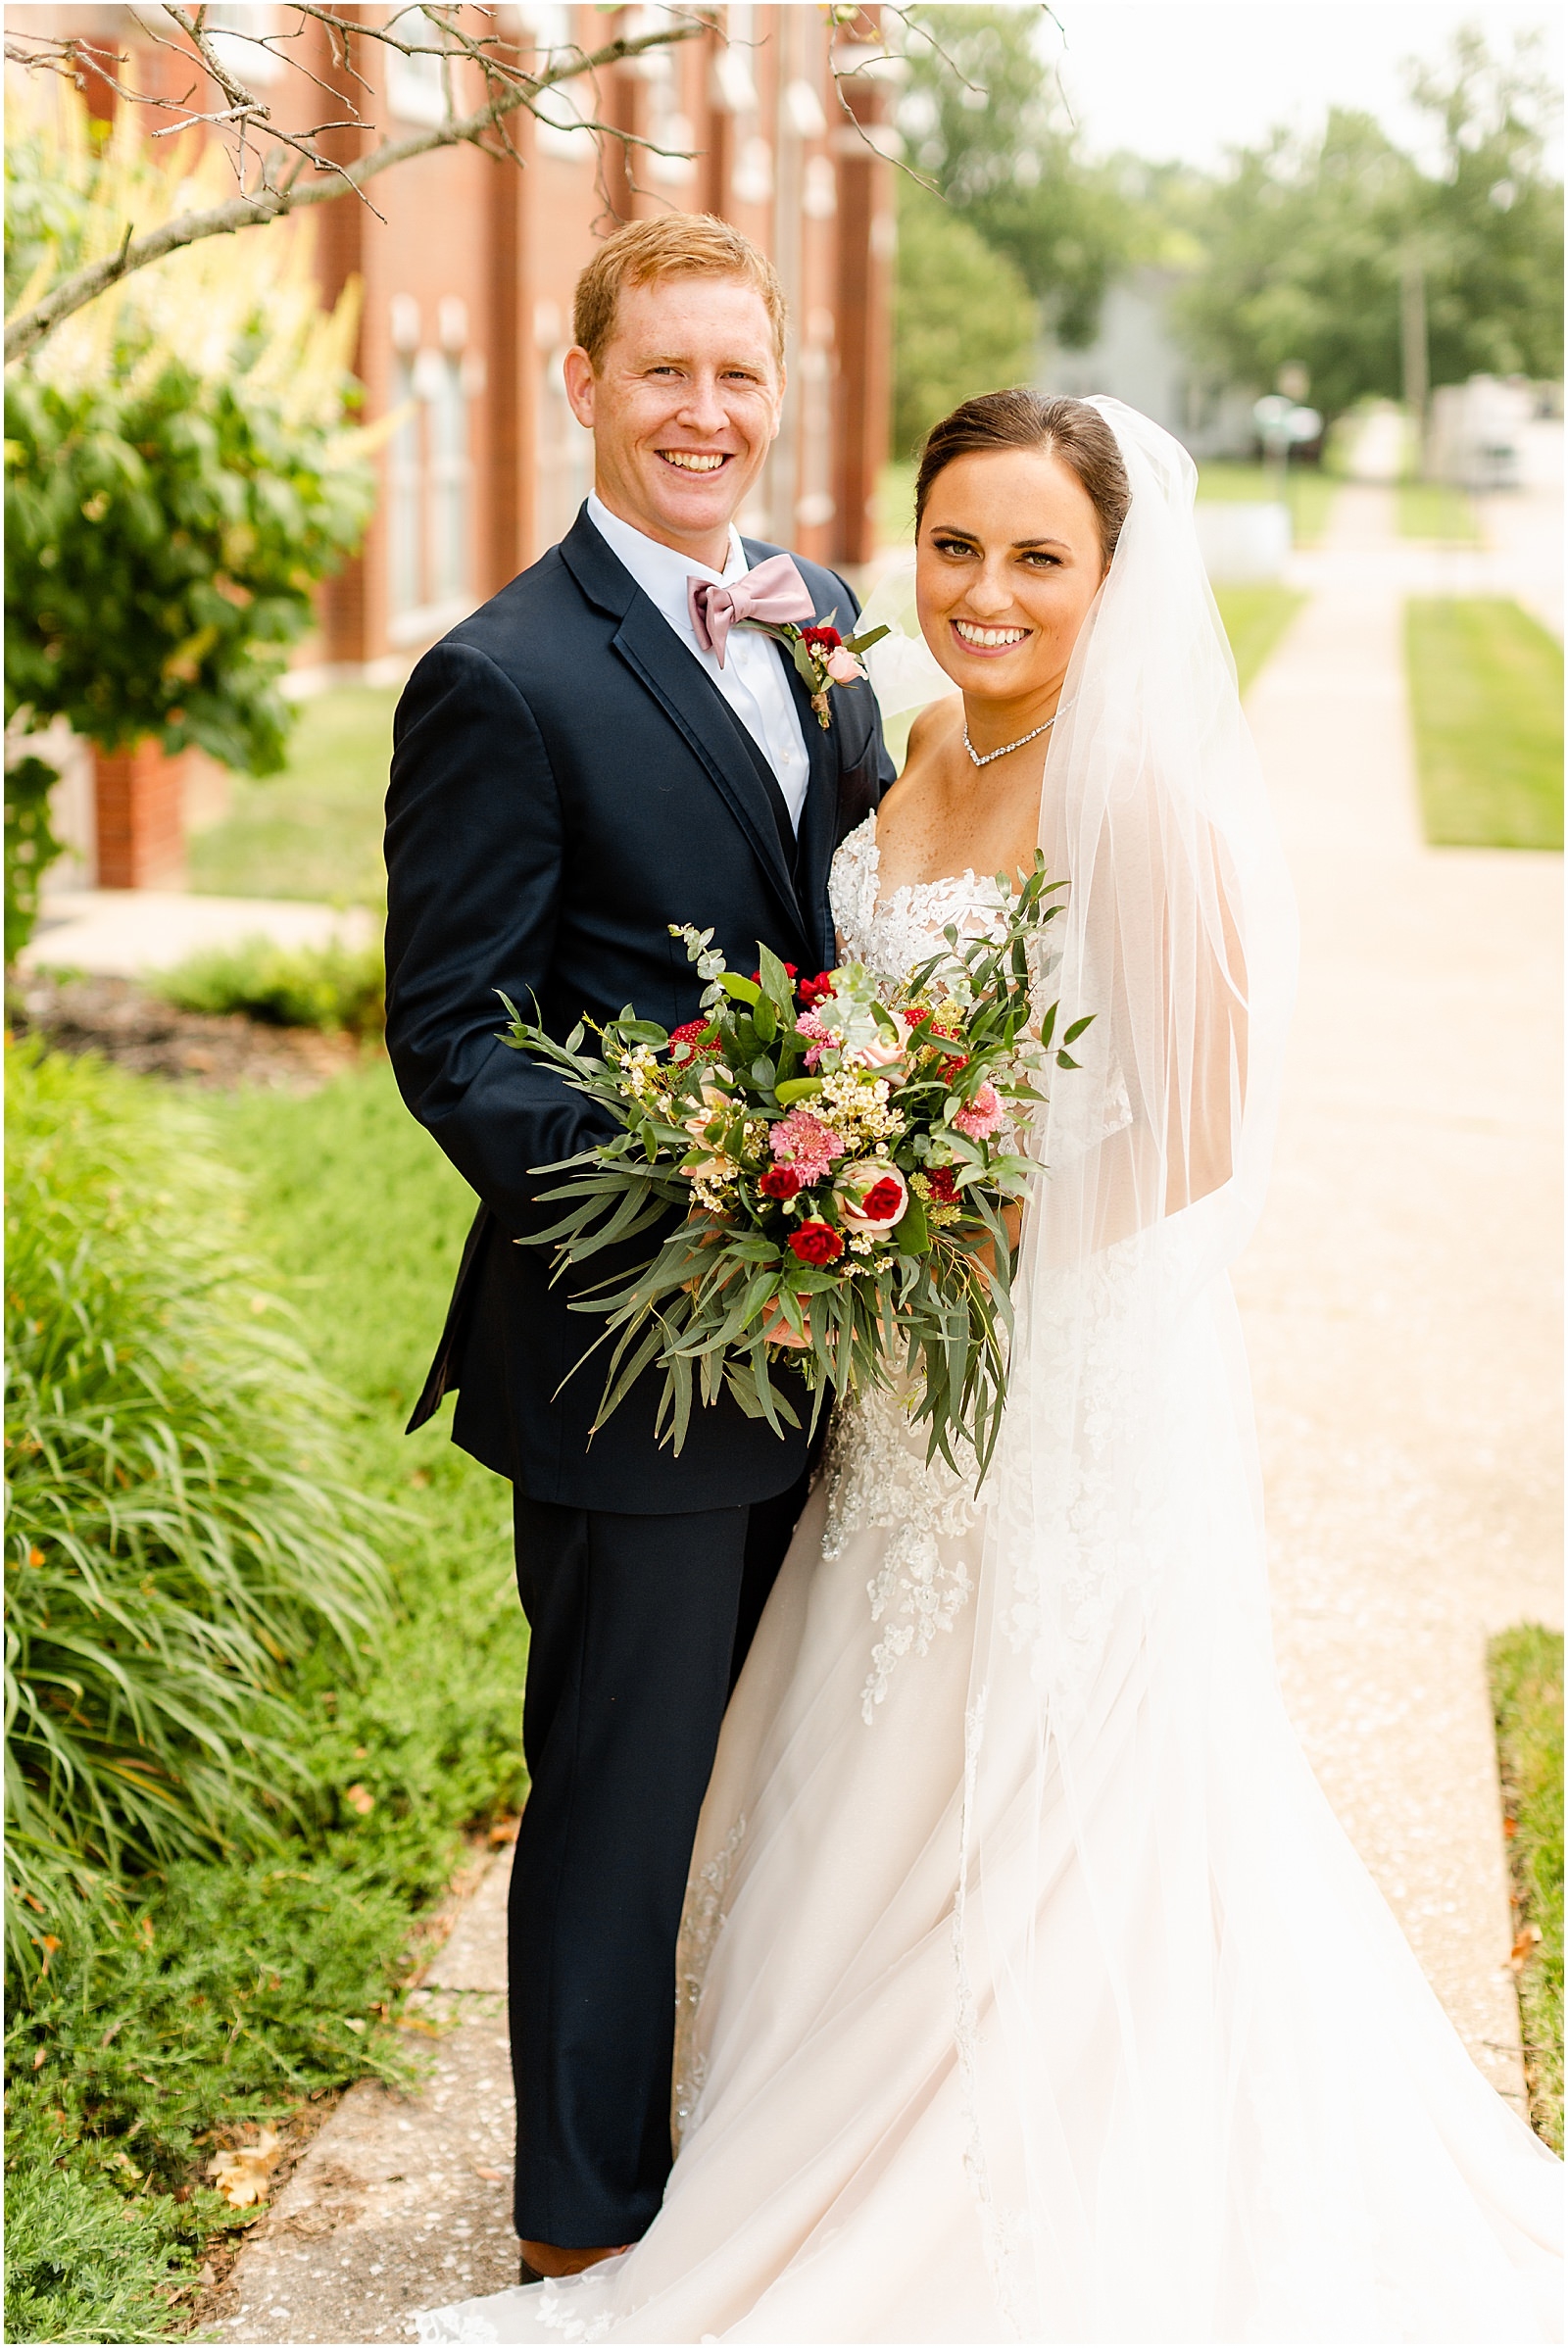 Deidra and Andrew | A Huntingburgh Indiana Wedding Bret and Brandie | Evansville Photographers | @bretandbrandie-0061.jpg